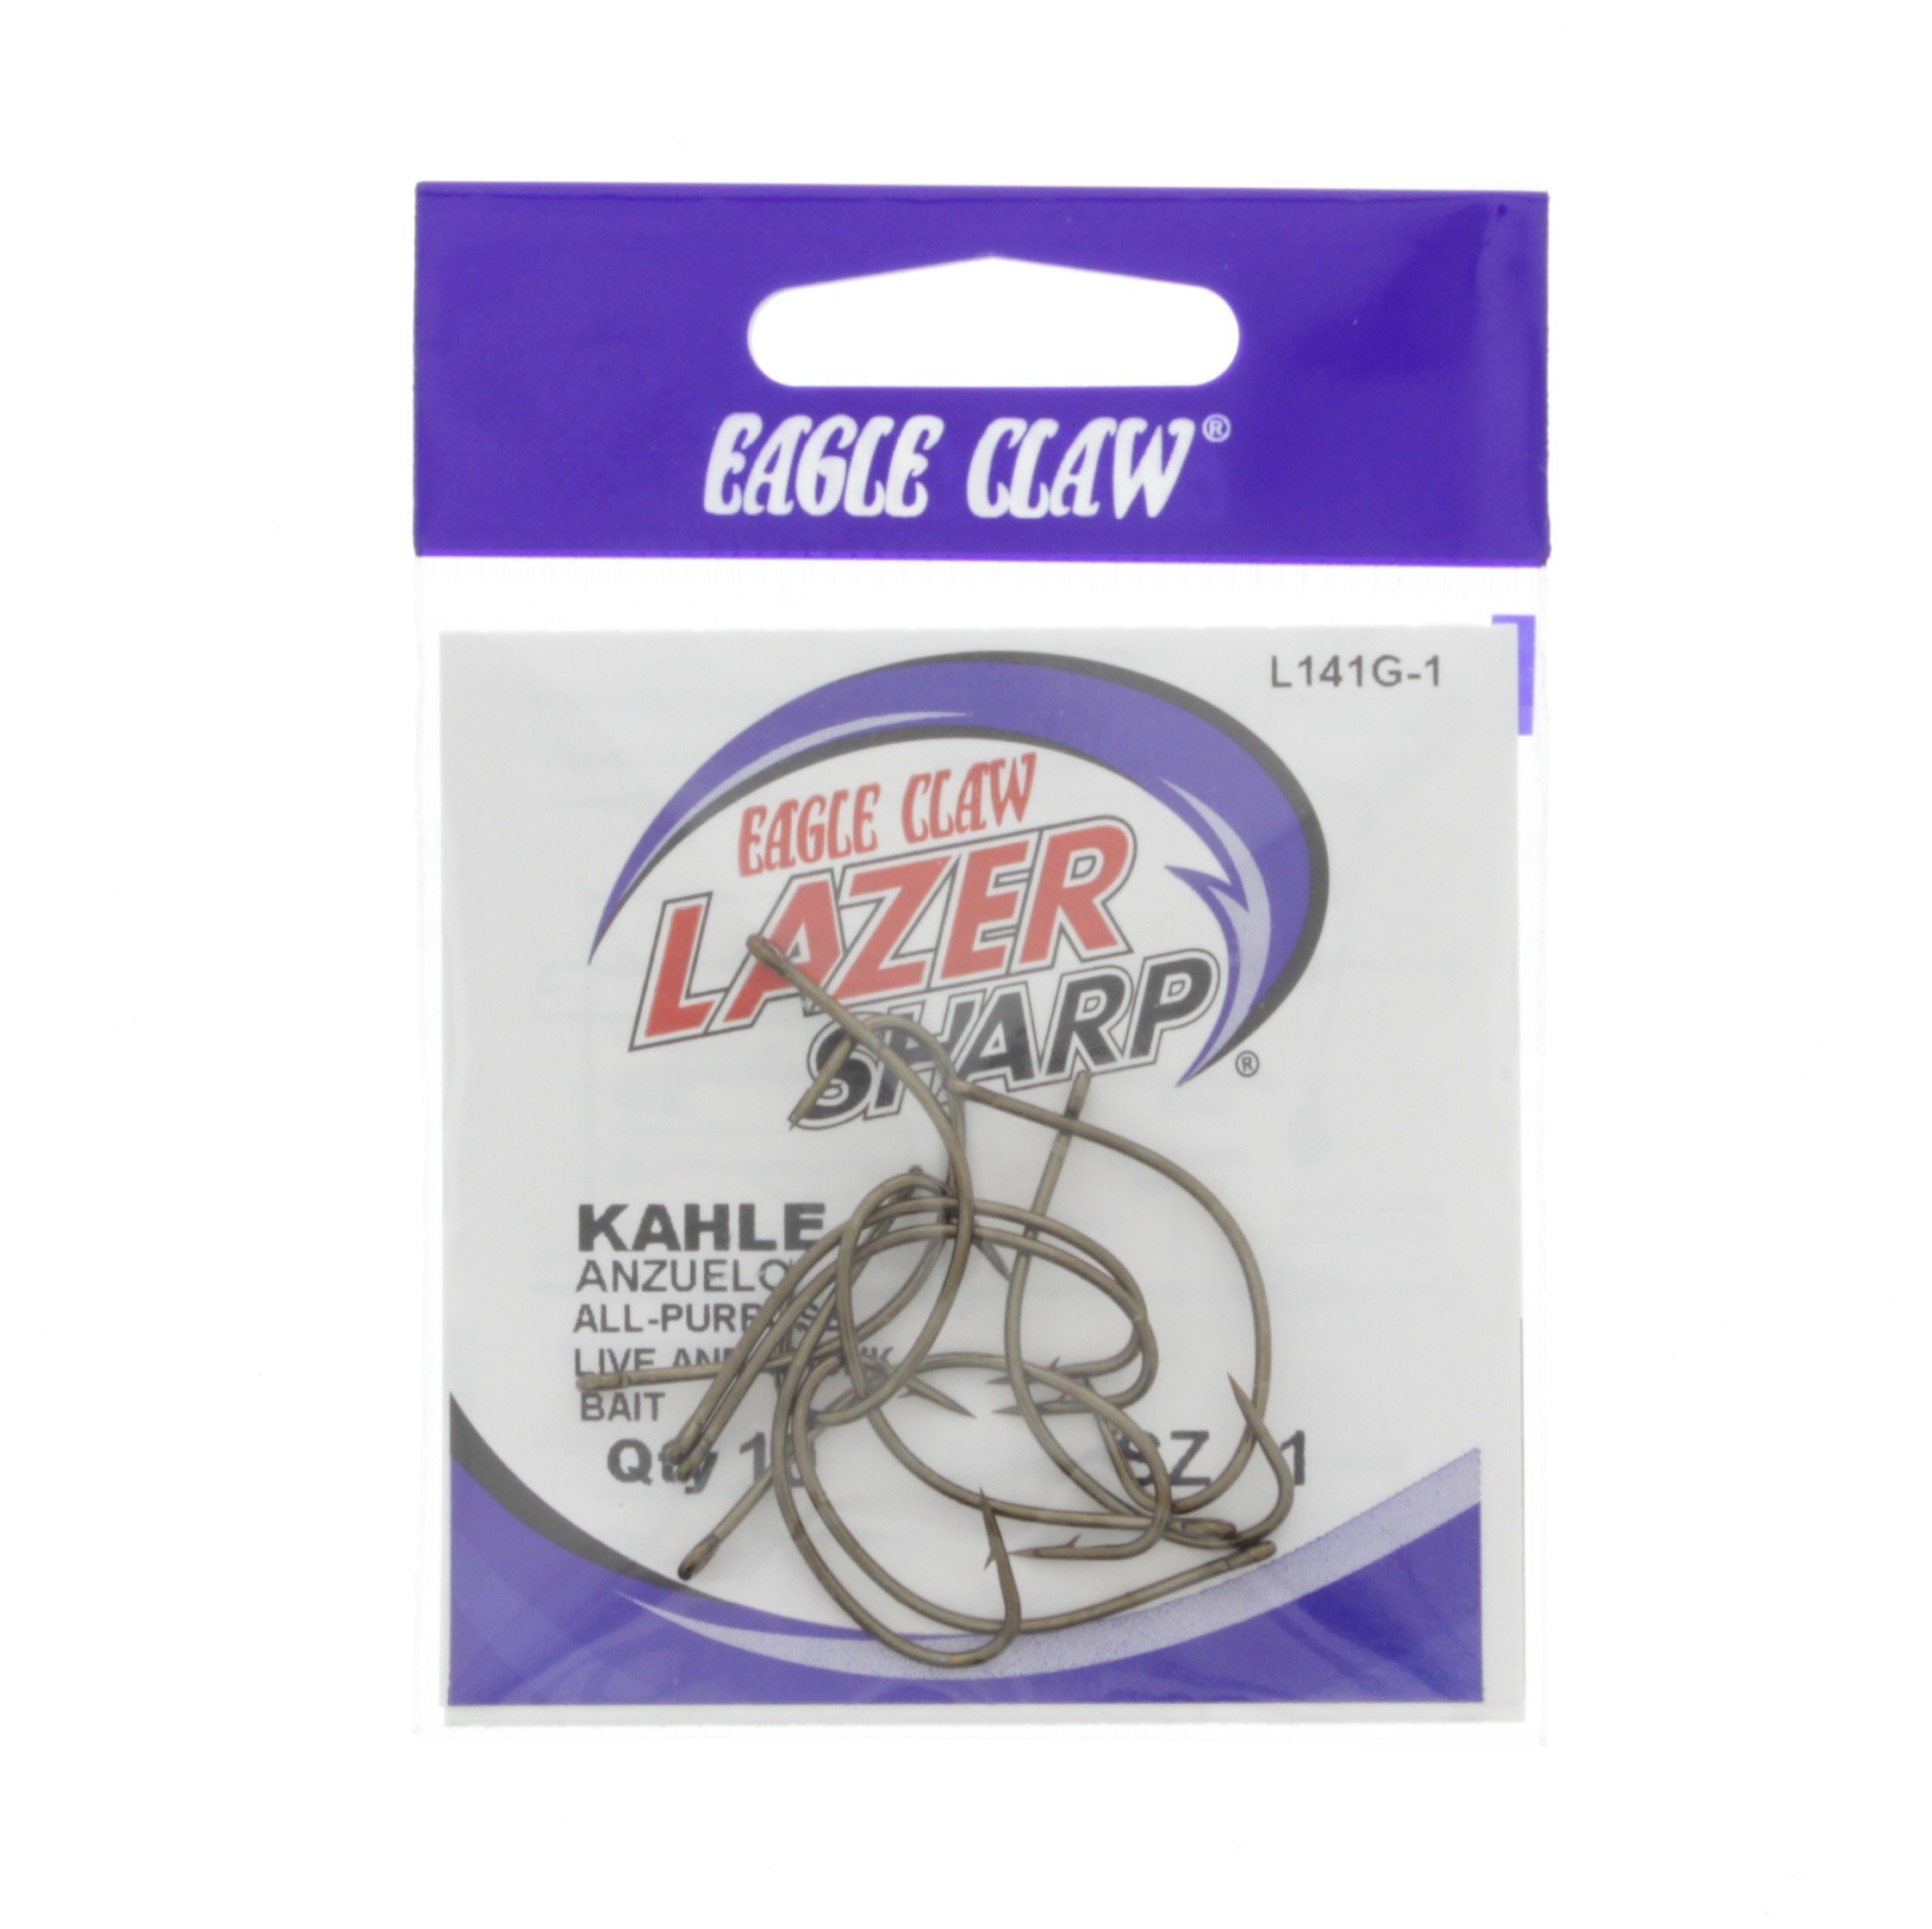 Lazer Sharp Eagle Claw Kahle Fishing Hooks - Shop Fishing at H-E-B